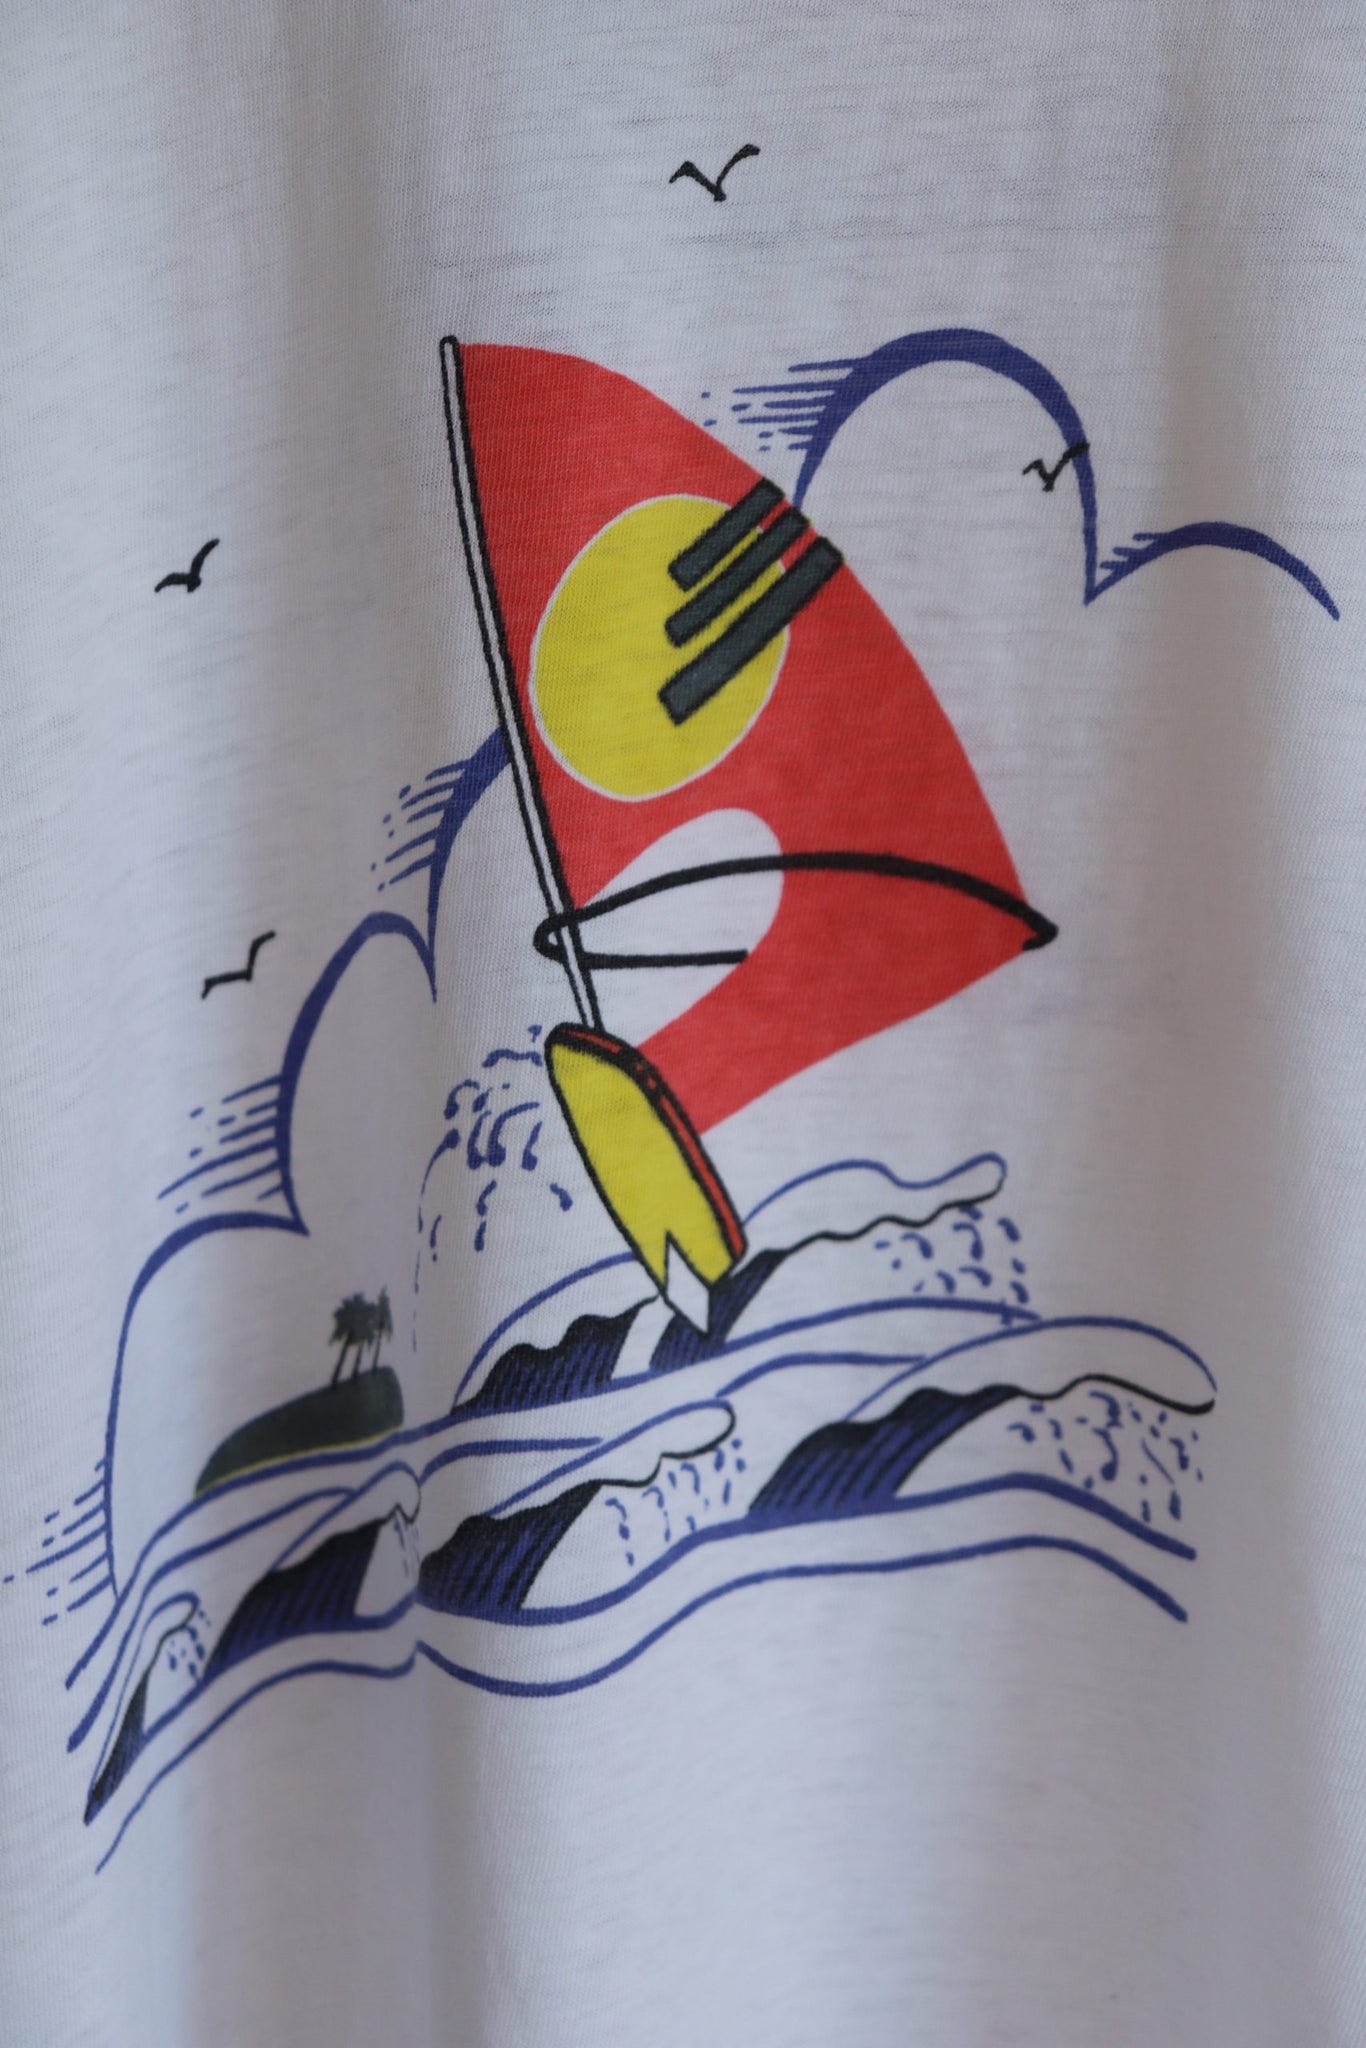 80s Thin St Croix SAILING T-Shirt